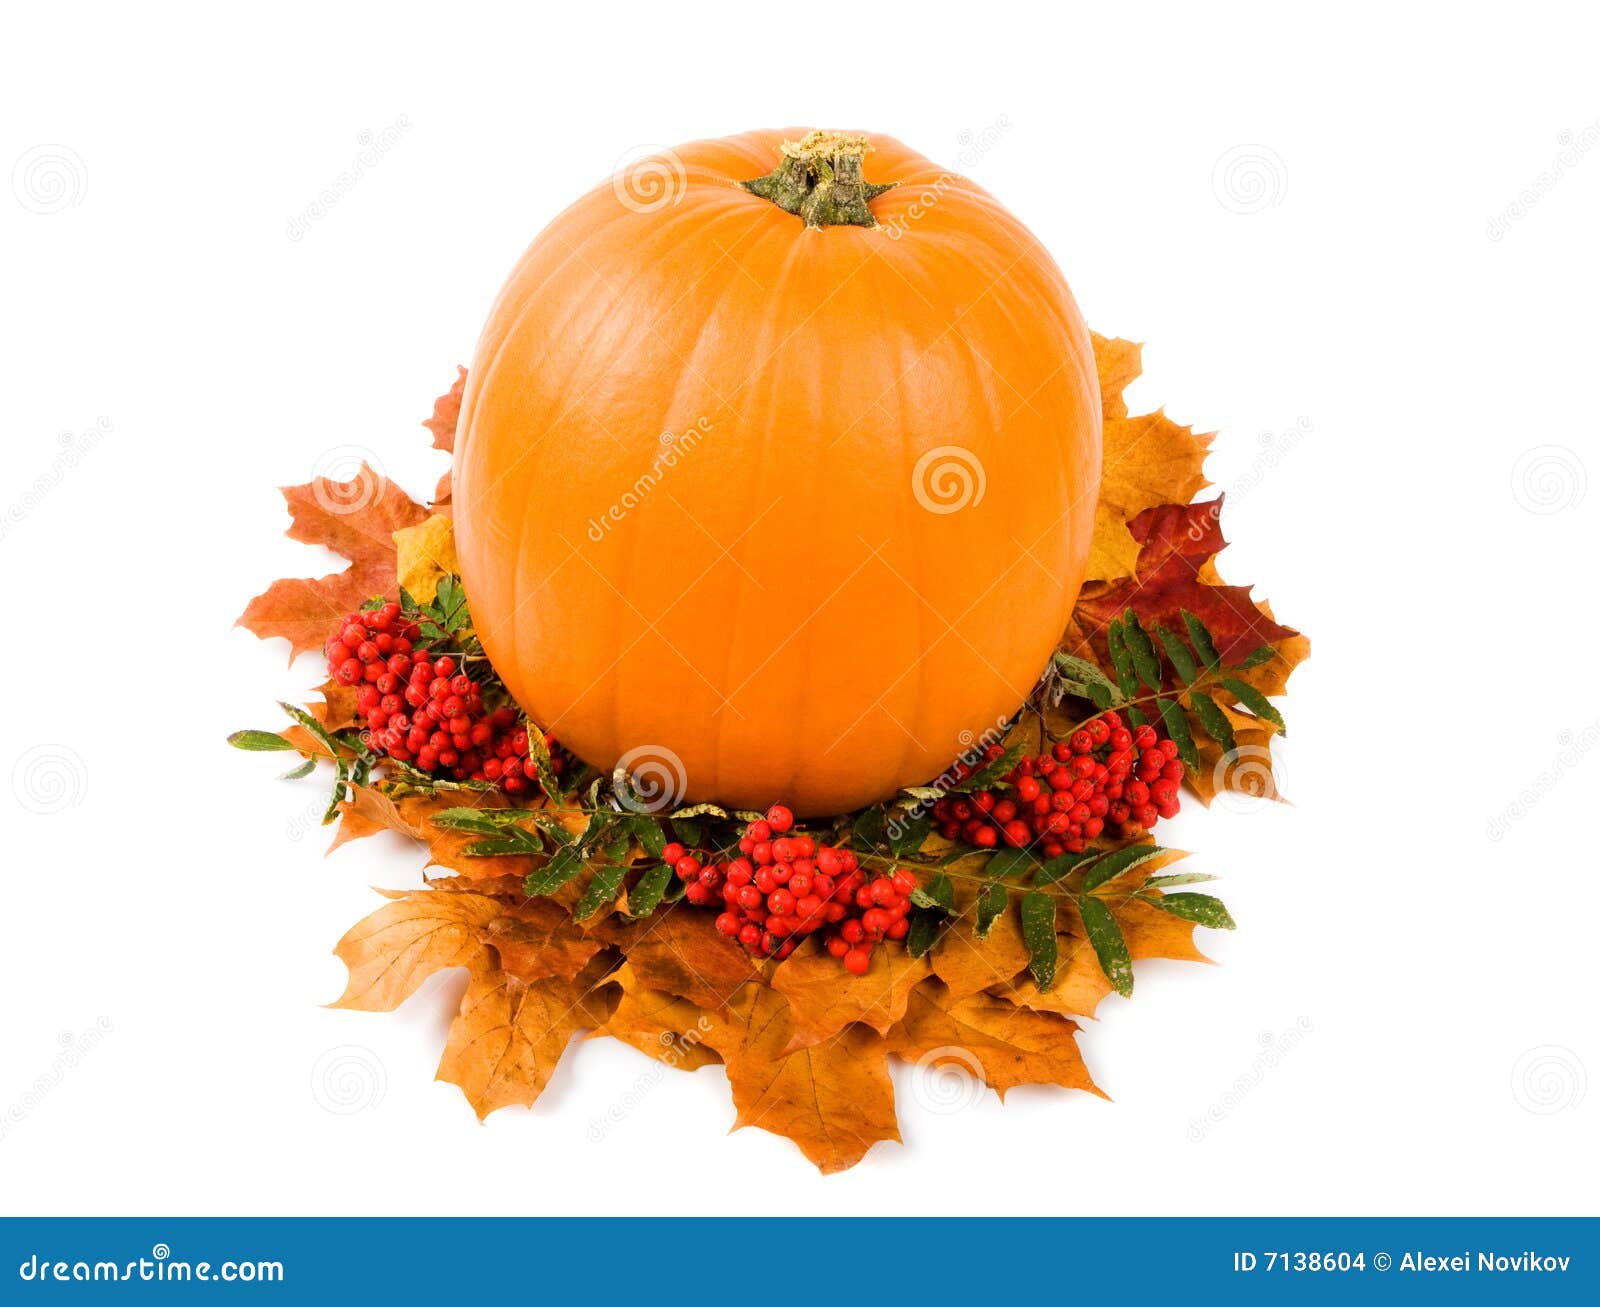 Fall harvest decoration stock photo. Image of garden, festival - 7138604